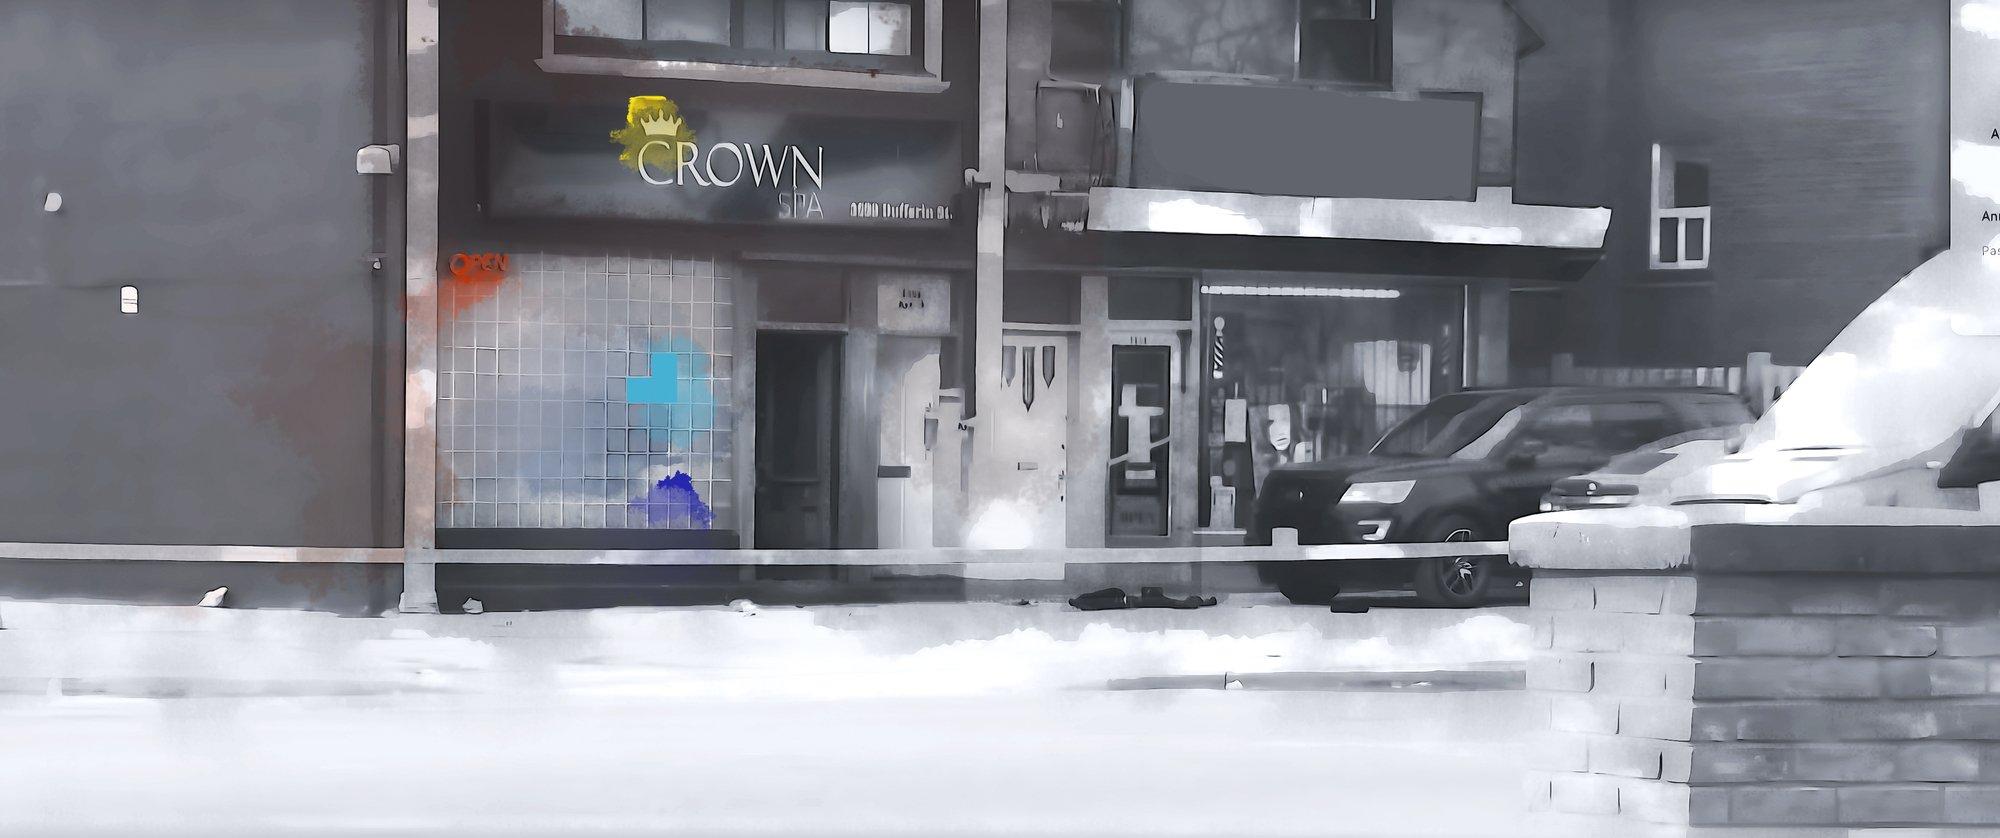 Crown Spa, one of Torontoâs 25 licensed body-rub parlours, occupied a small, two-storey building on Dufferin Street